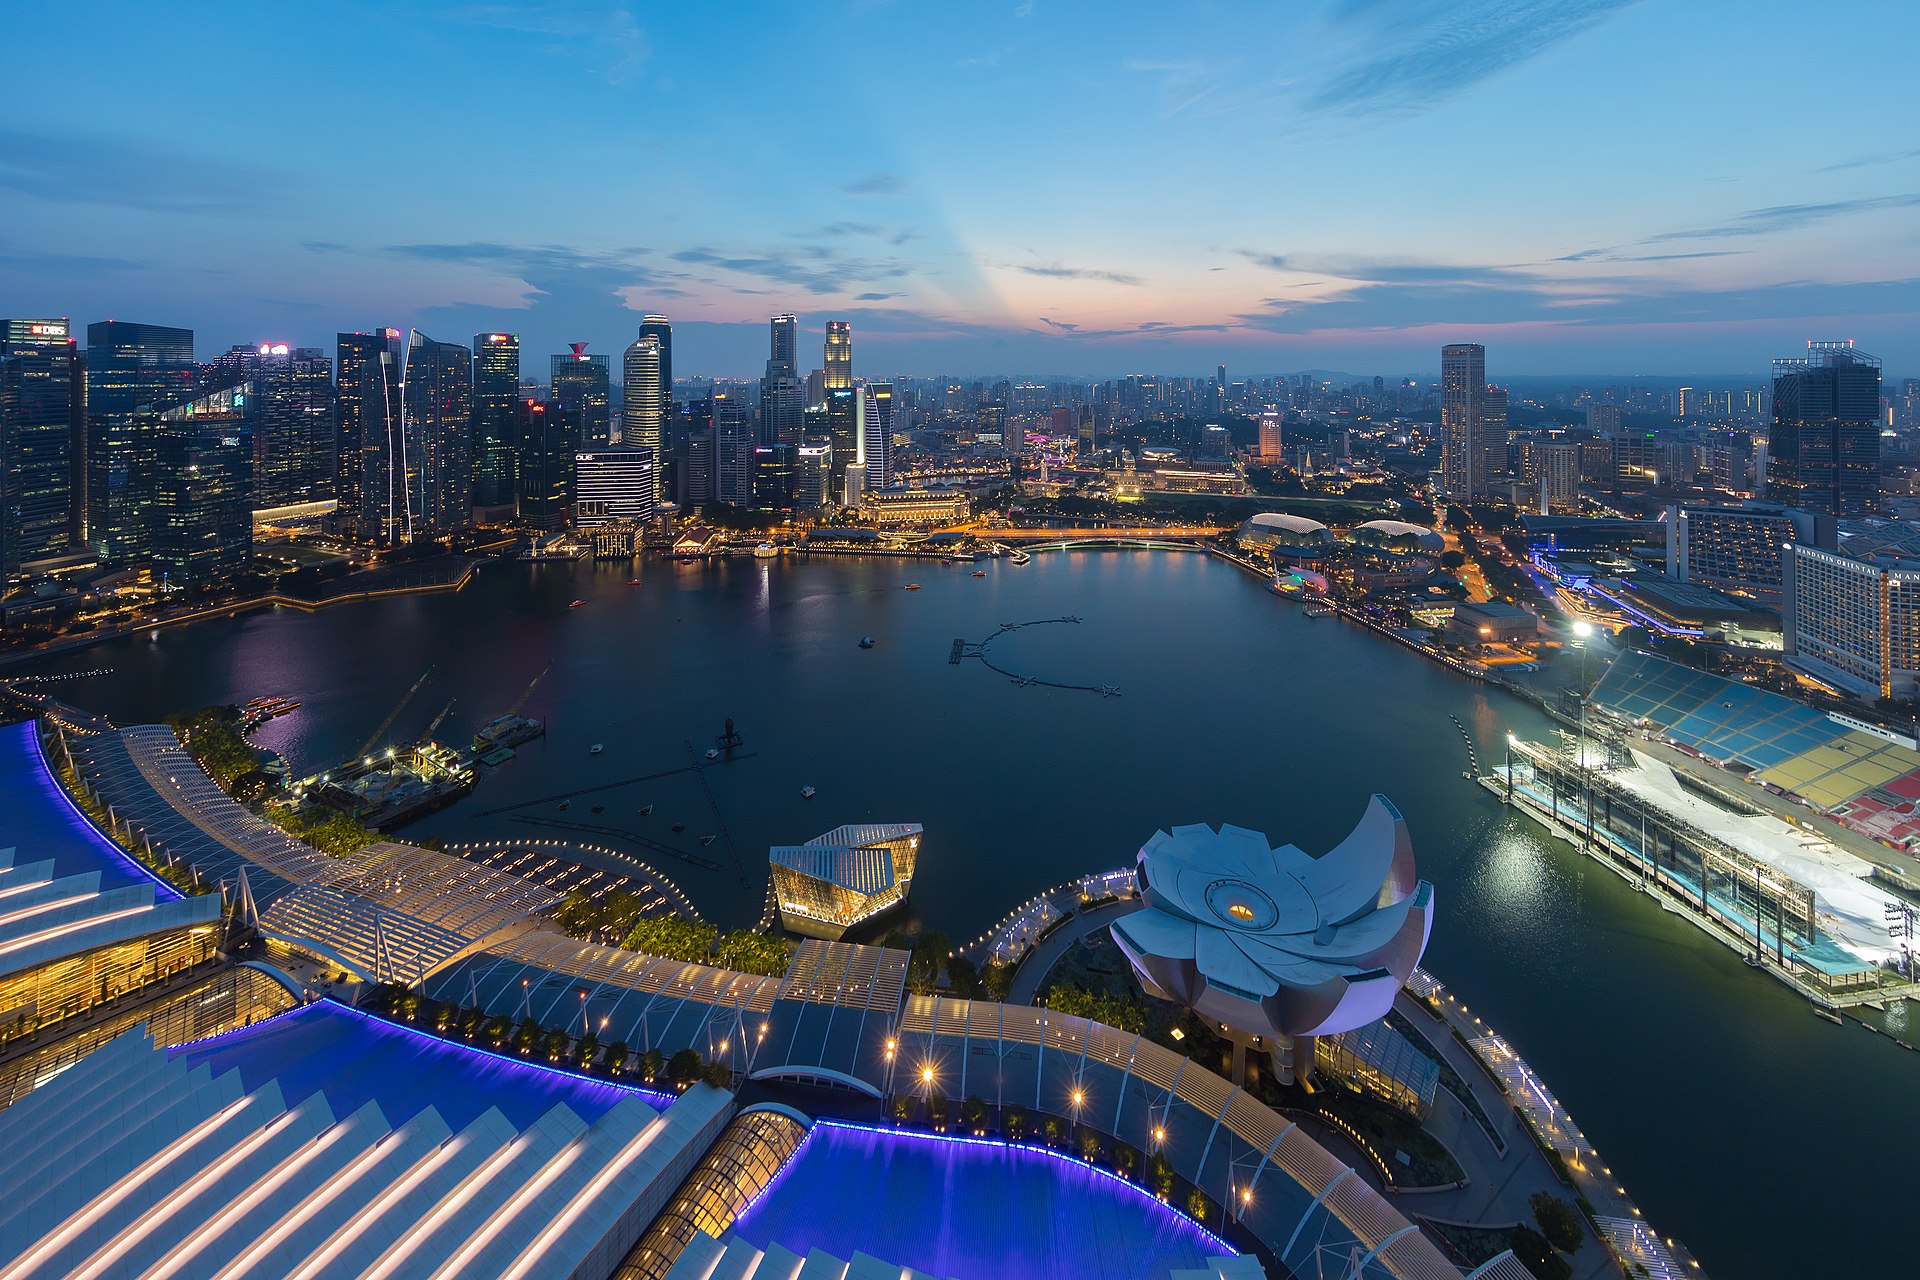 Singapore in 2013: Startups glisten, but broadband needs boost